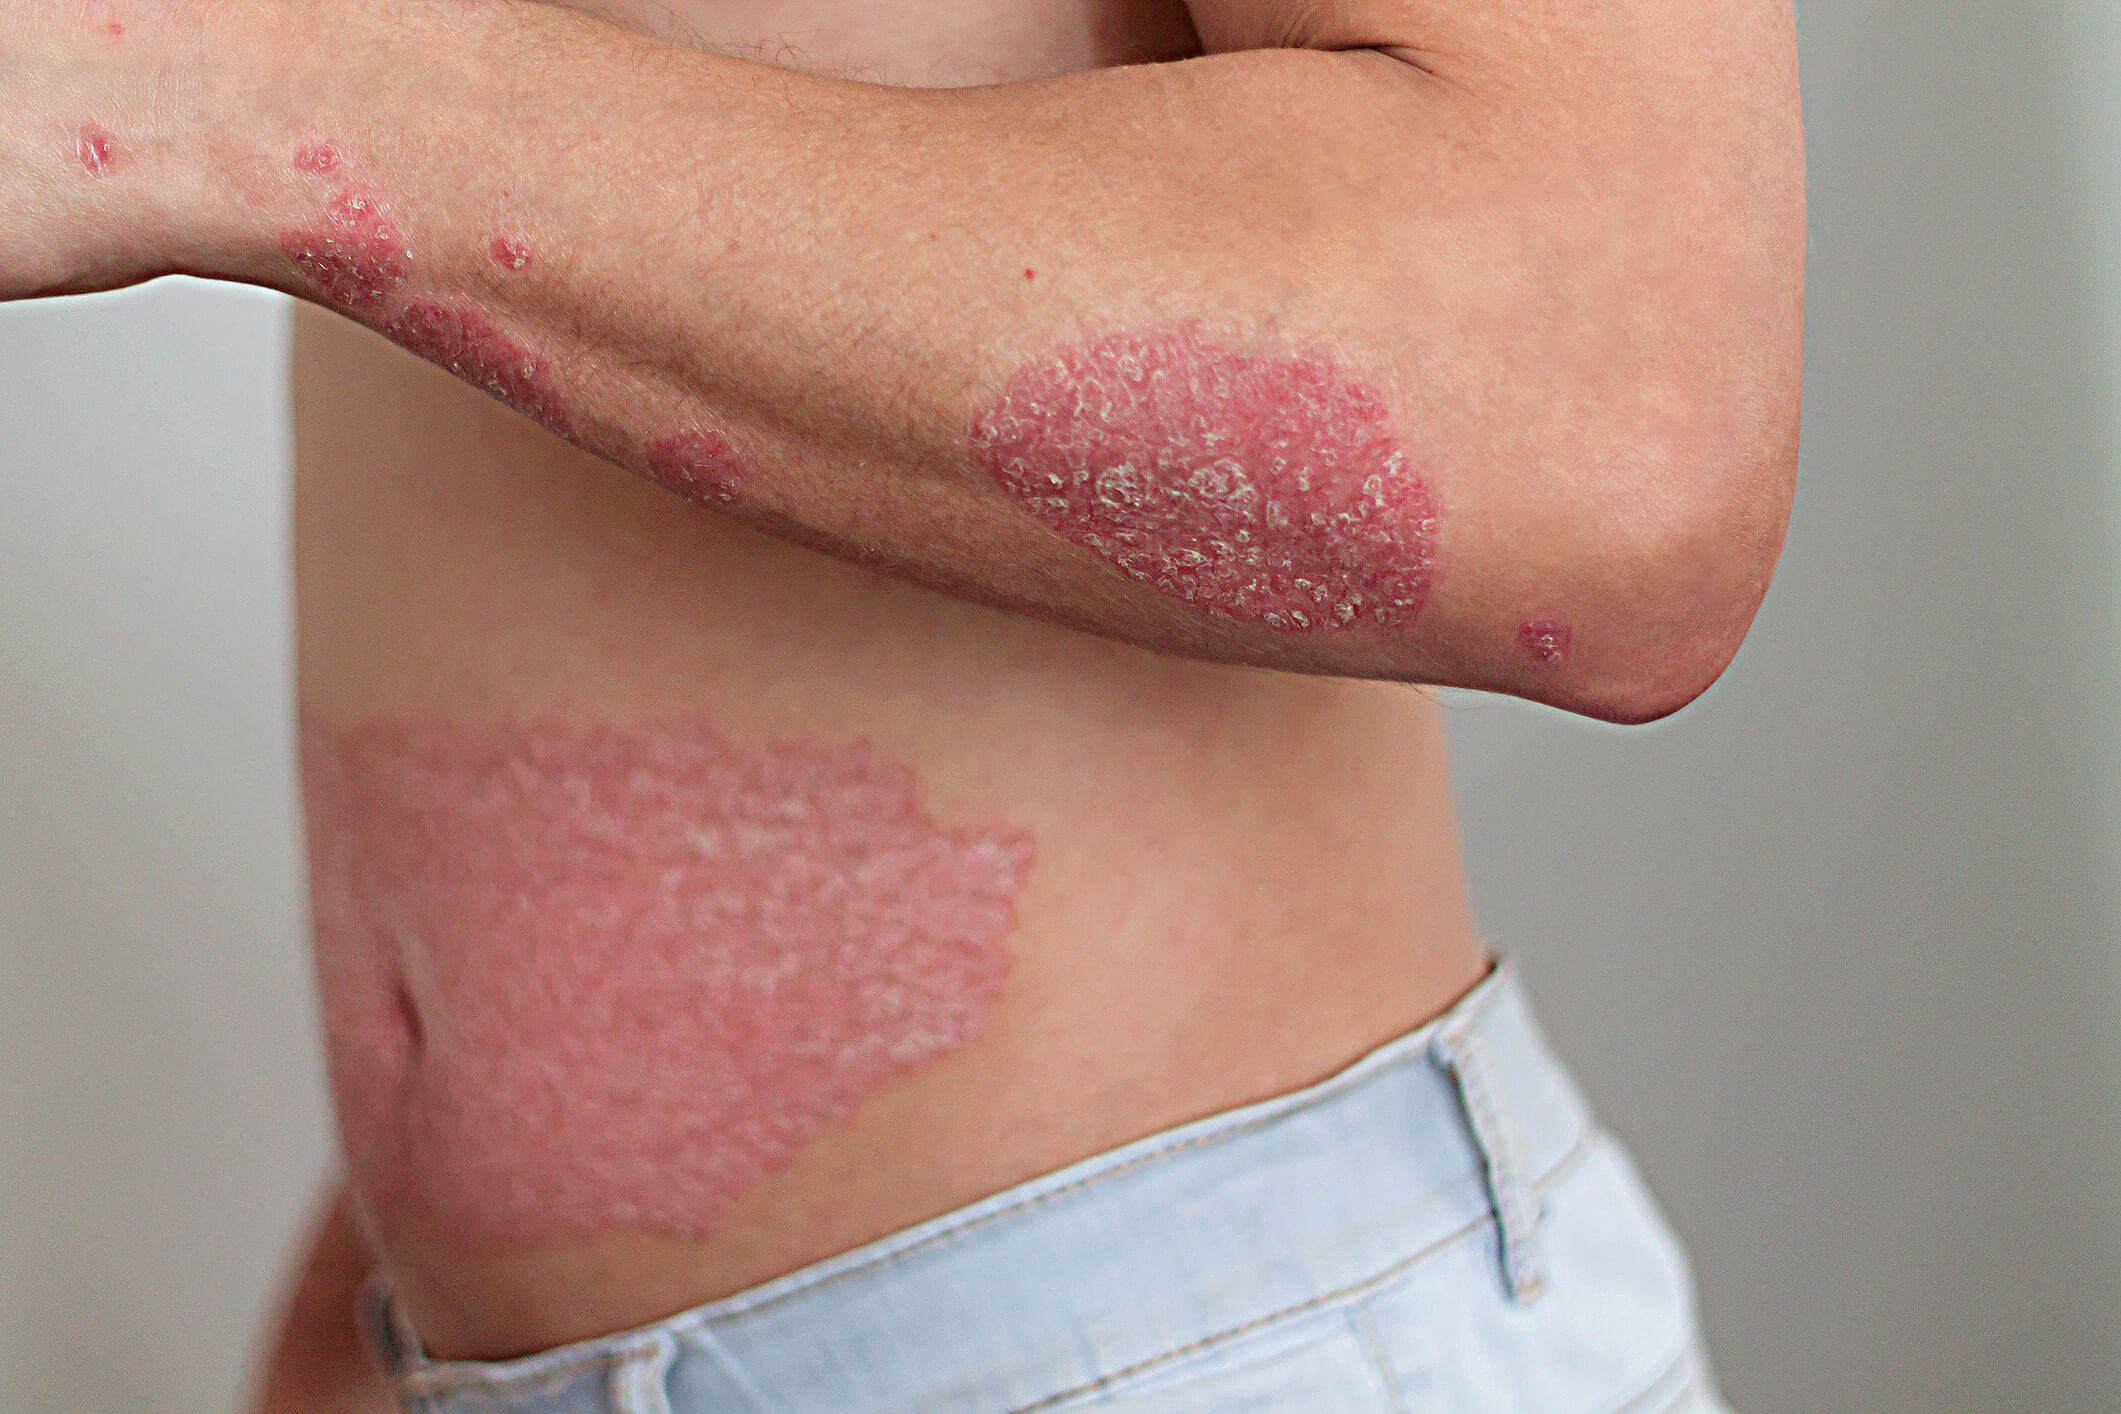 psoriasis skin disease pictures hogyan kell kezelni a pikkelysmr egszsgesen